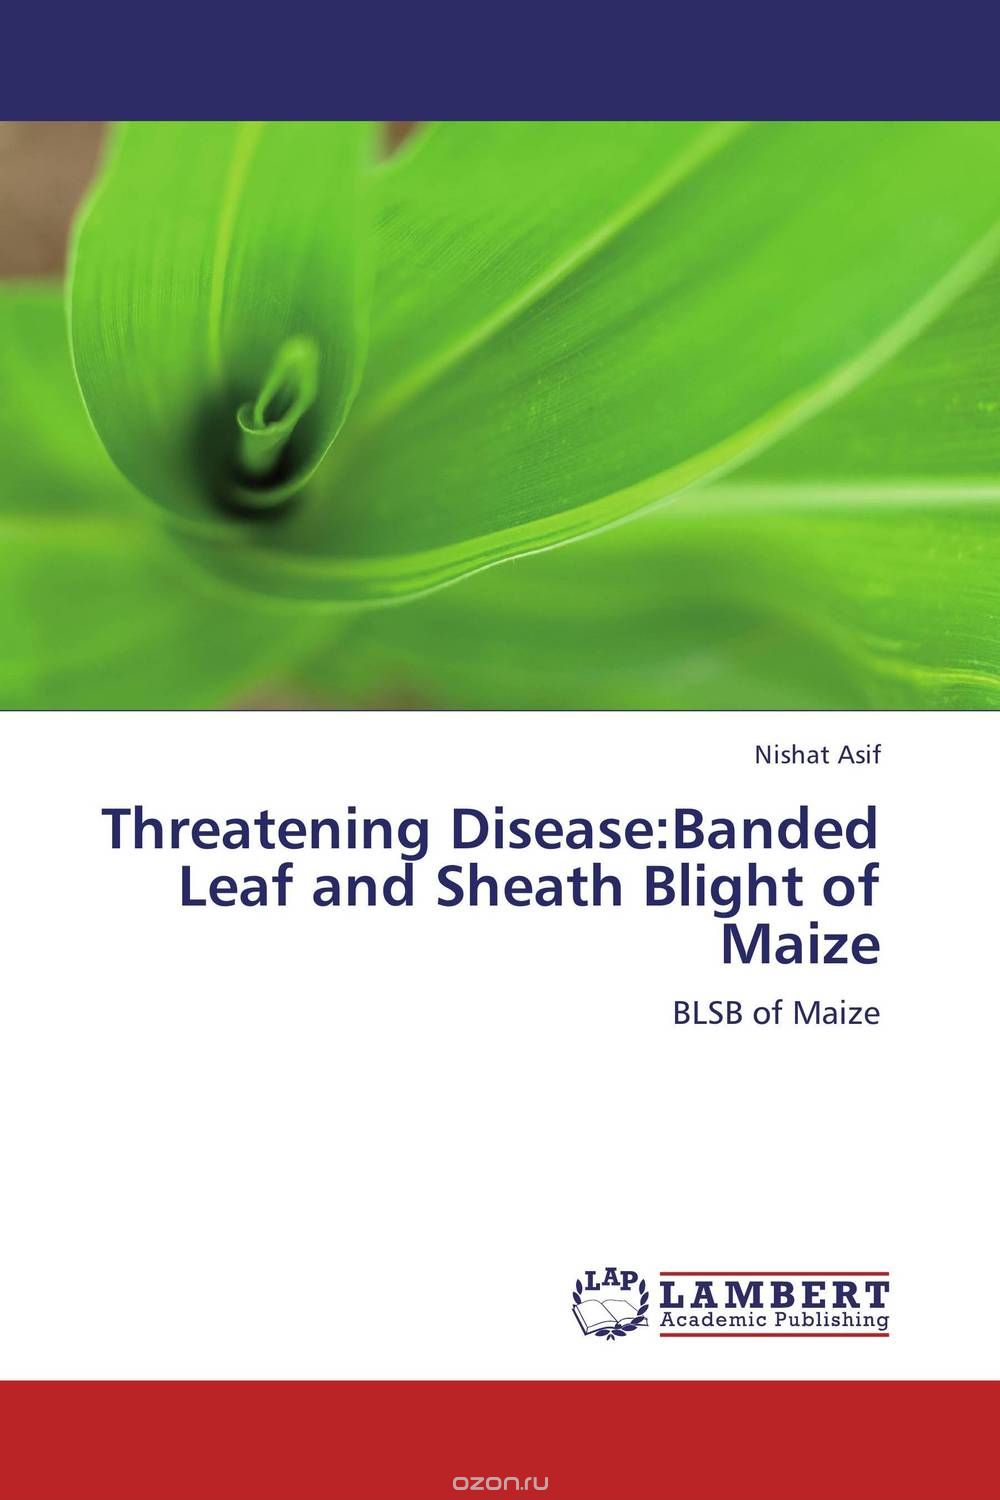 Скачать книгу "Threatening Disease:Banded Leaf and Sheath Blight of Maize"